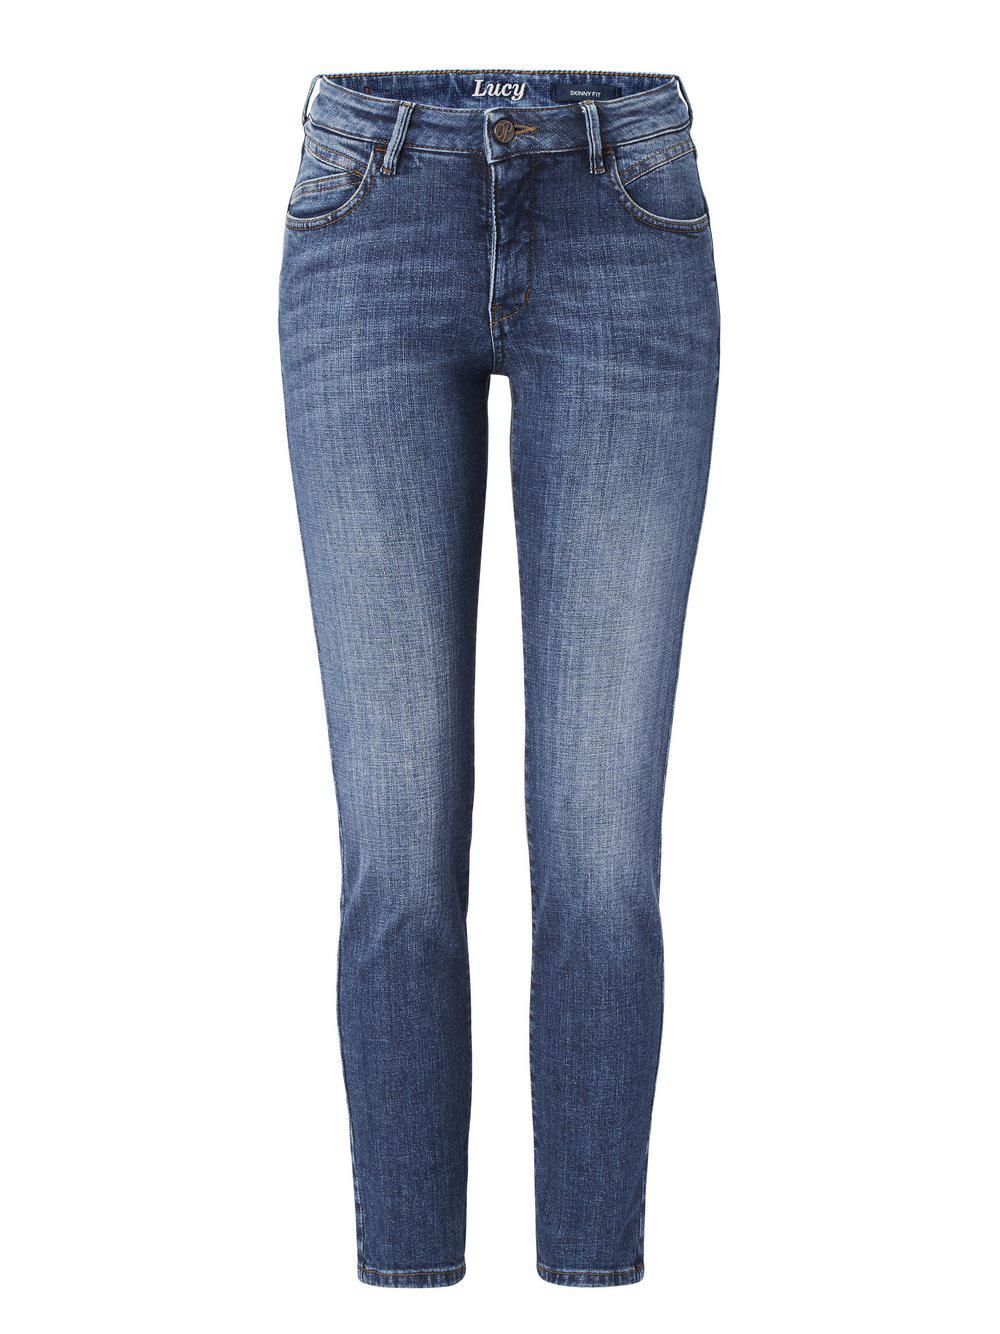 Paddock`s 5-Pocket Jeans Damen Baumwolle, blau von Paddock's